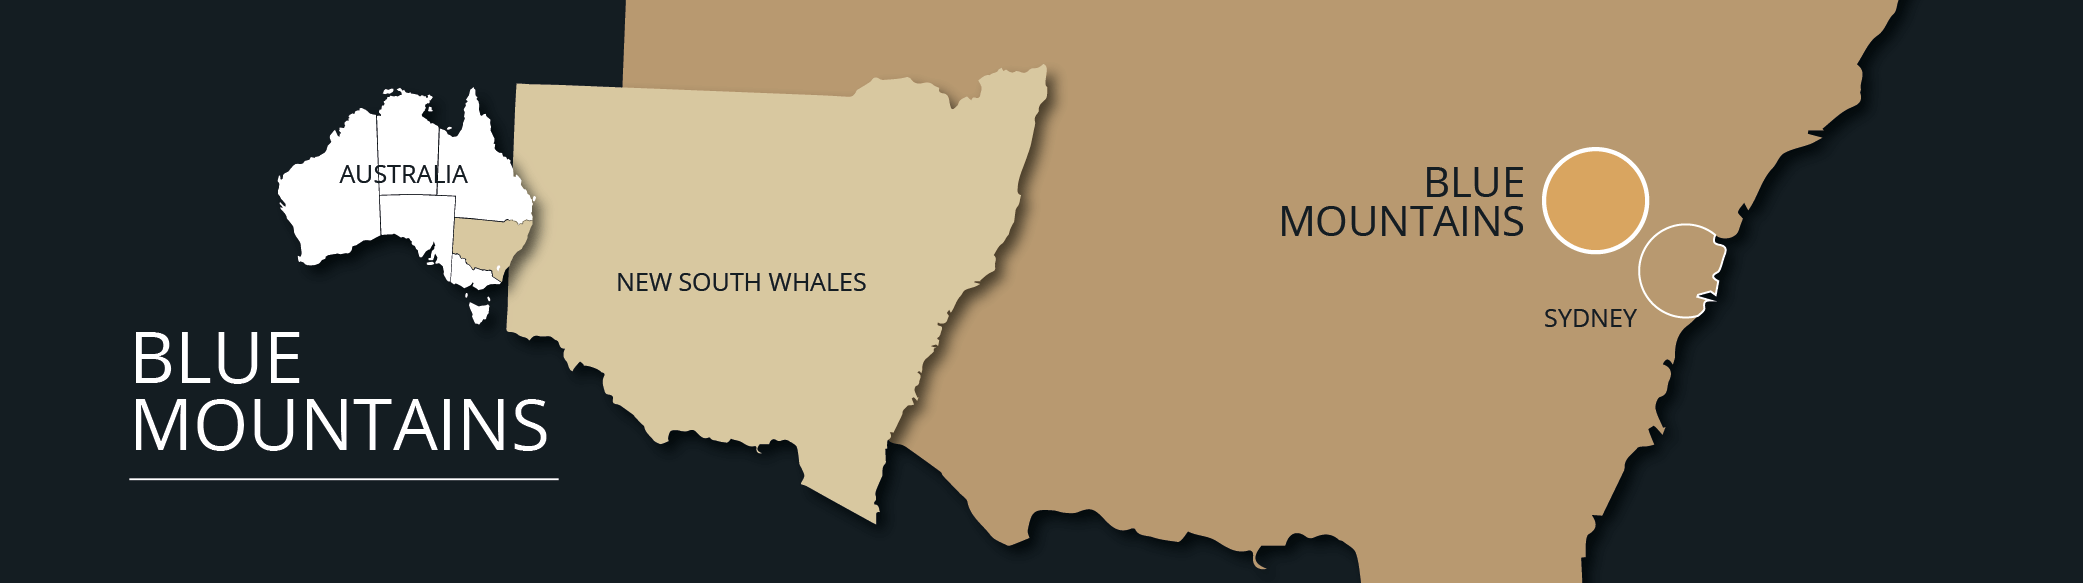 Map of Blue Mountains near Sydney NSW Australia